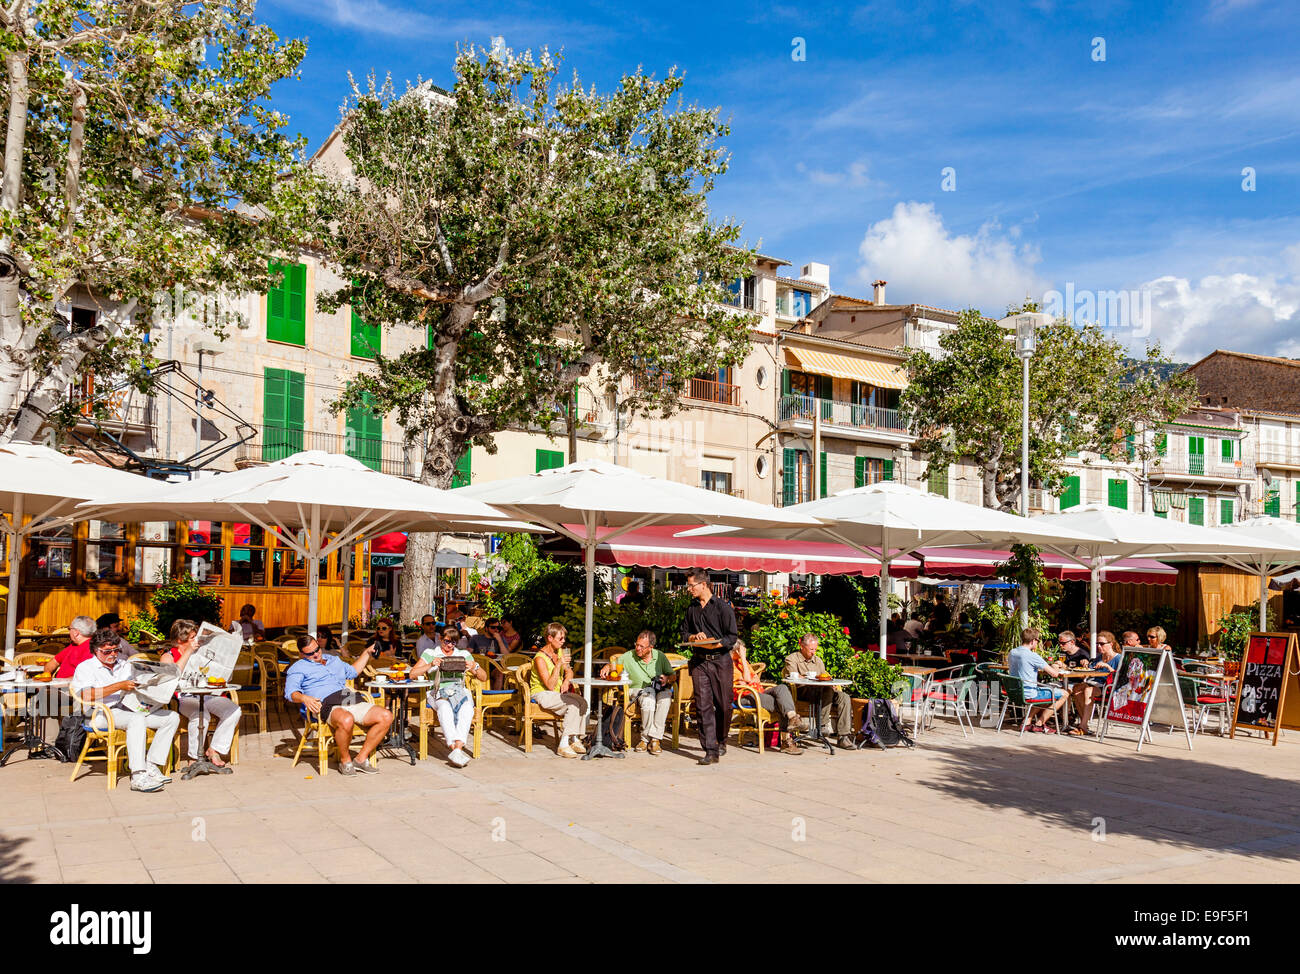 Cafe/Restaurant, Port de Soller, Mallorca - Spain Stock Photo - Alamy